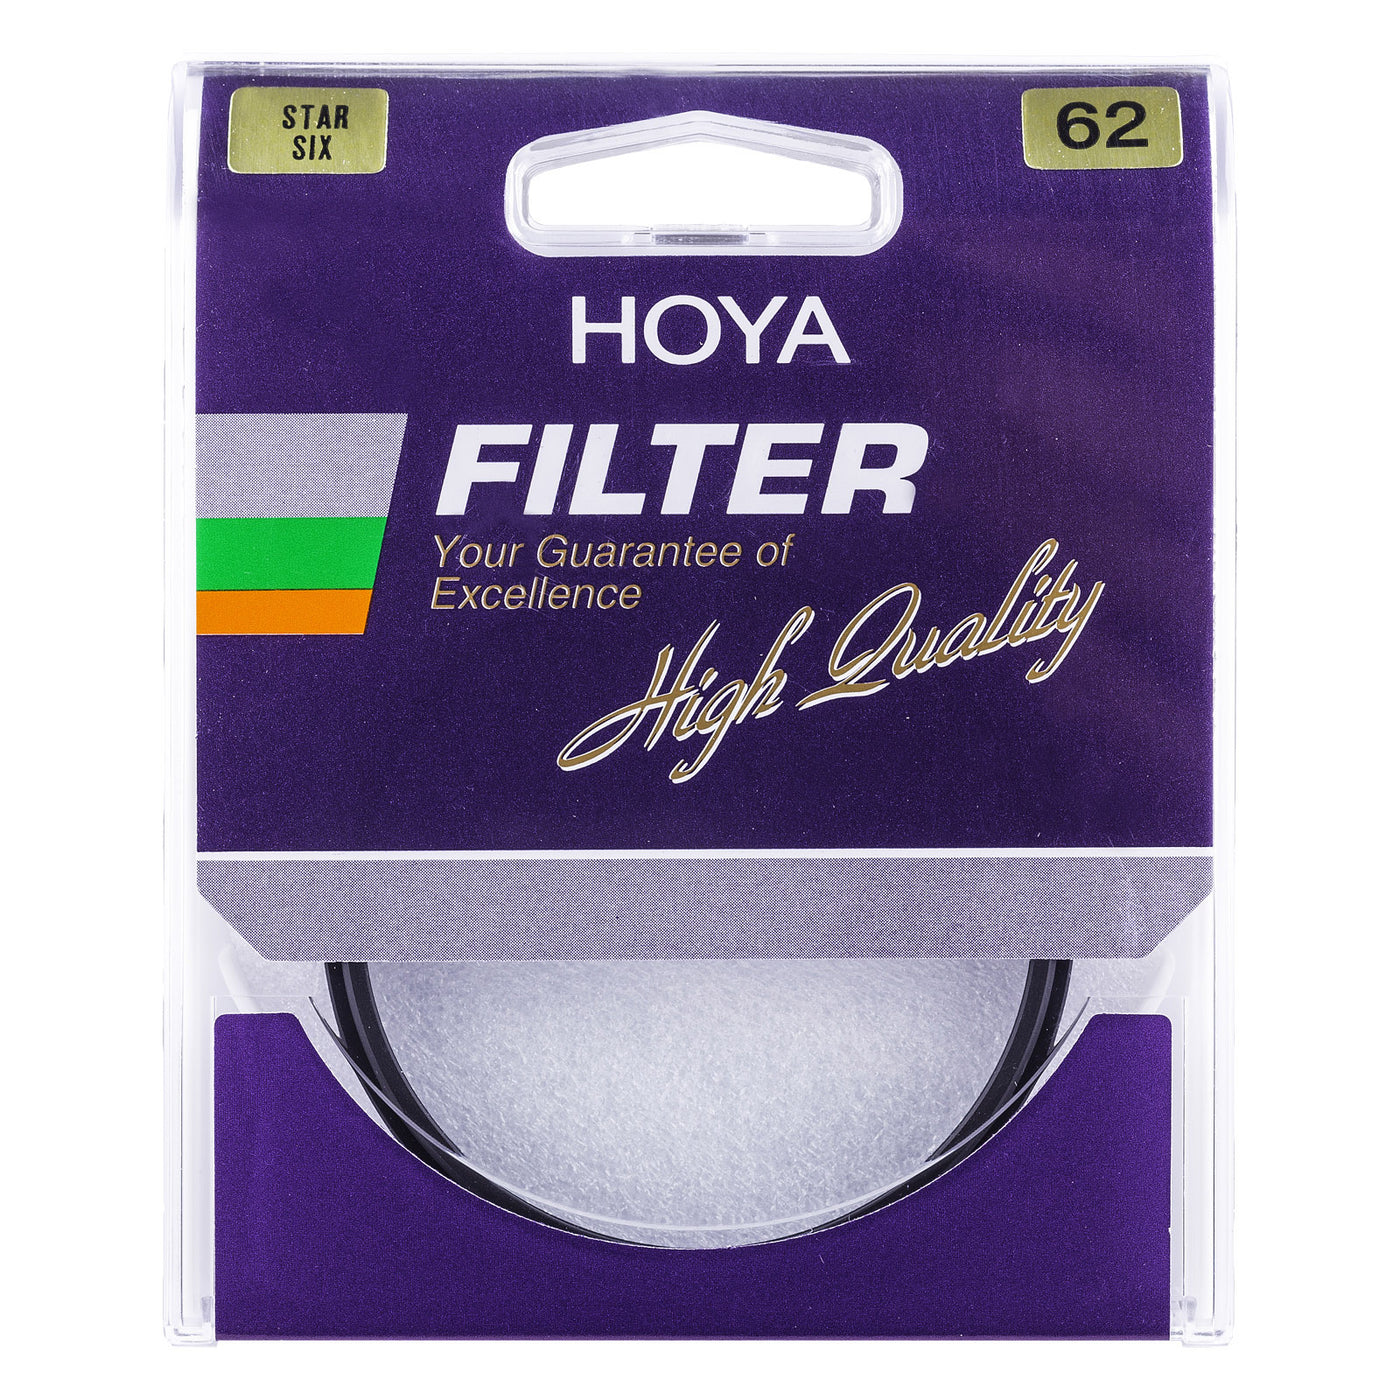 Hoya S Star-Six Filter Box